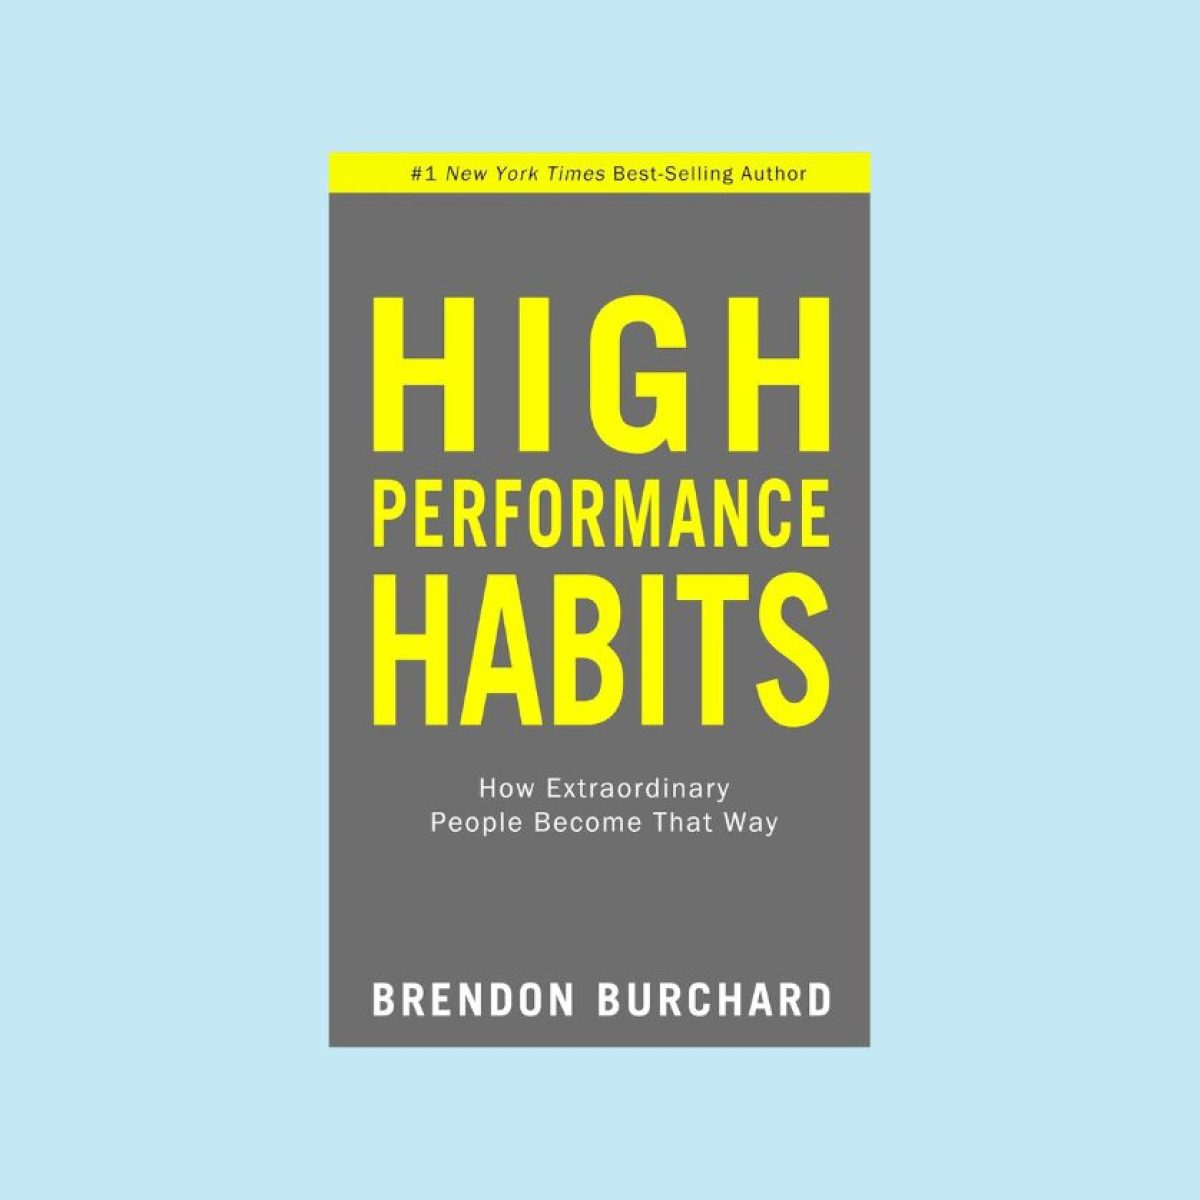 High performance habits by brendon burchard.